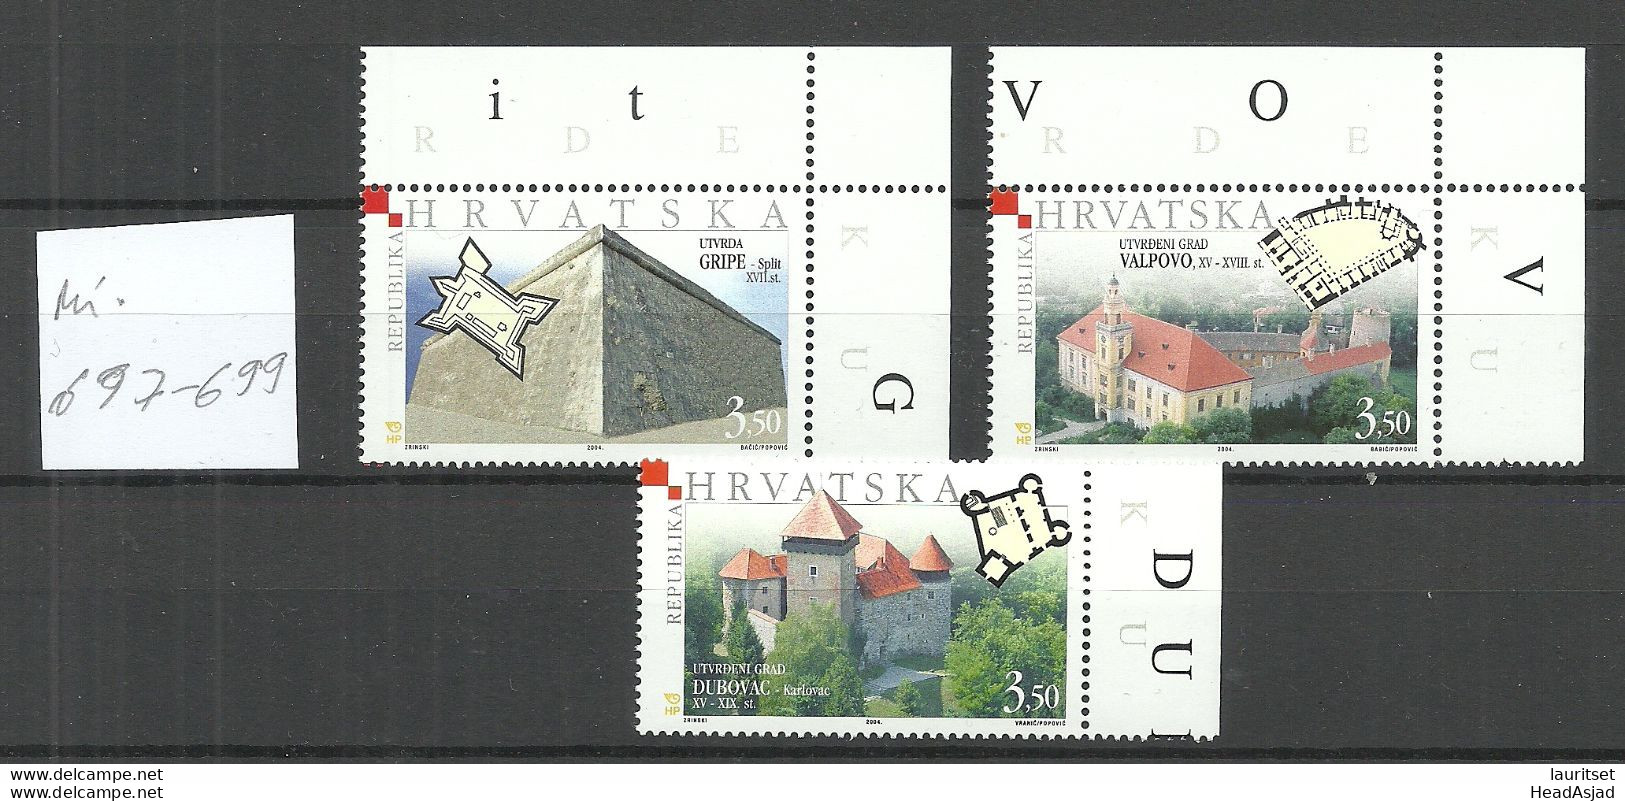 CROATIA Kroatien Hrvatska 2004 Michel 697 - 699 MNH Architecture Castles Middle Age Mittel√§lterliche Burgen - Croatia